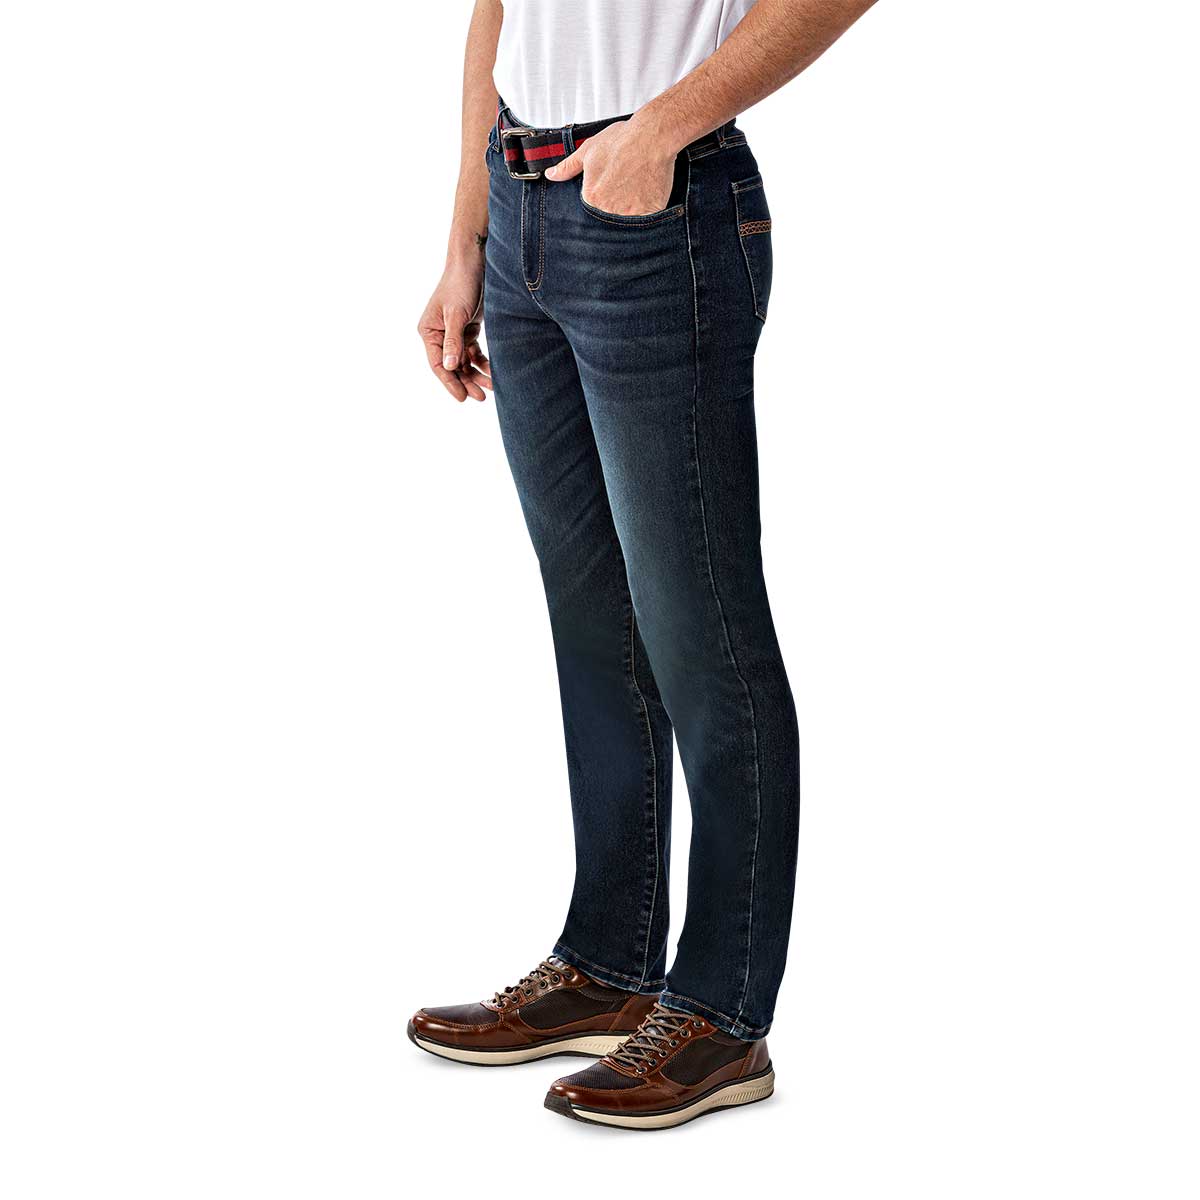 Pakar.com - Mayo: Regalos para mamá | Jeans para hombre cod-113318